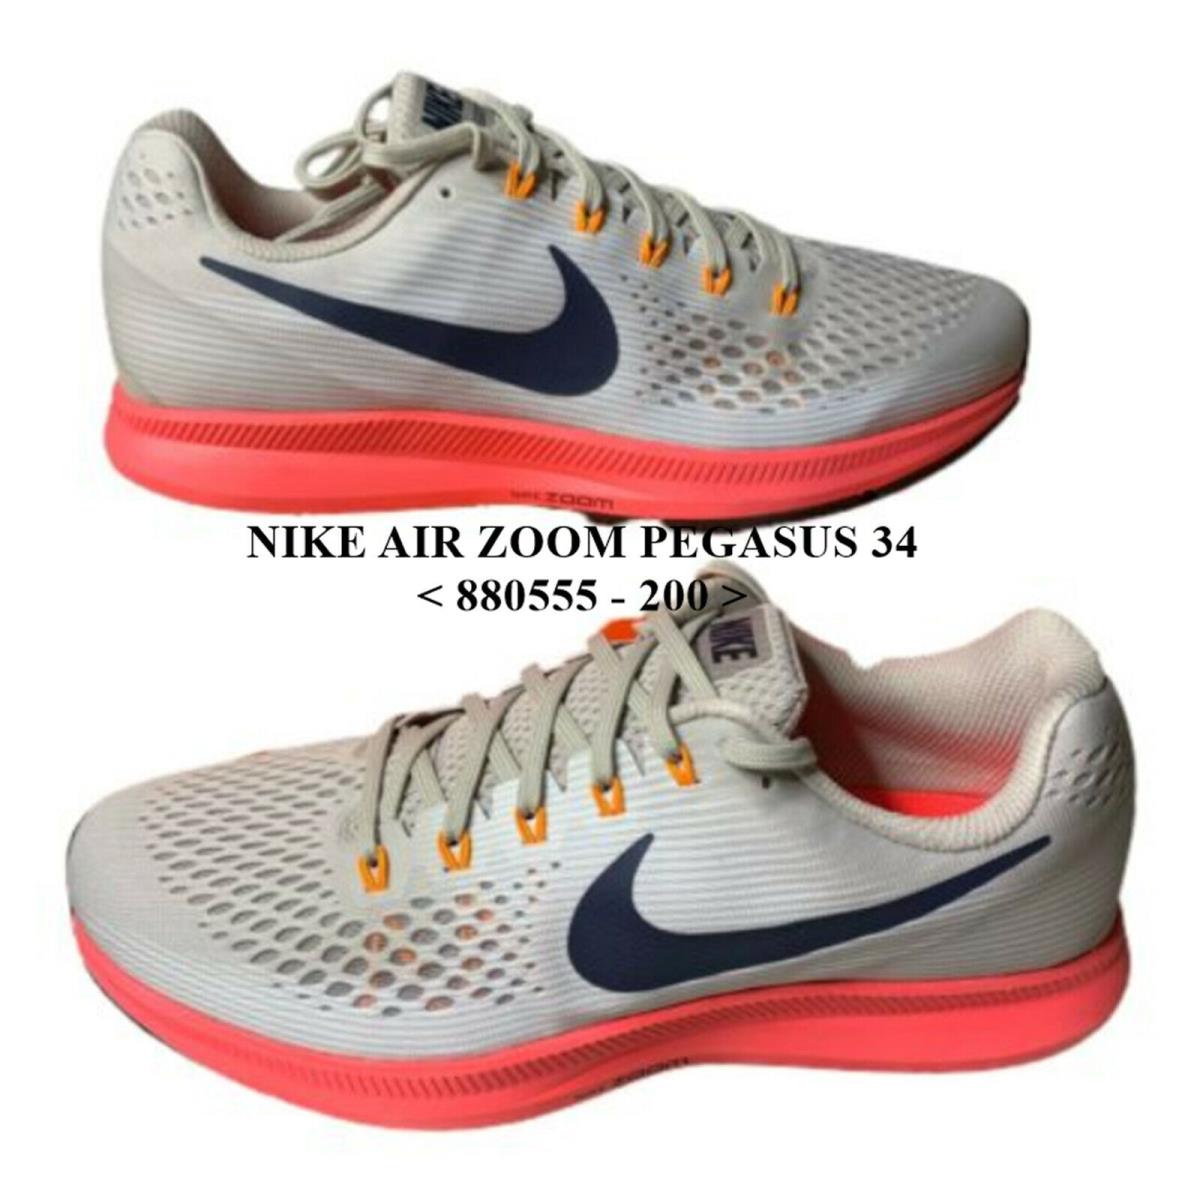 Nike Air Zoom Pegasus 34 880555 - 200 Men`s Running Shoes with Box